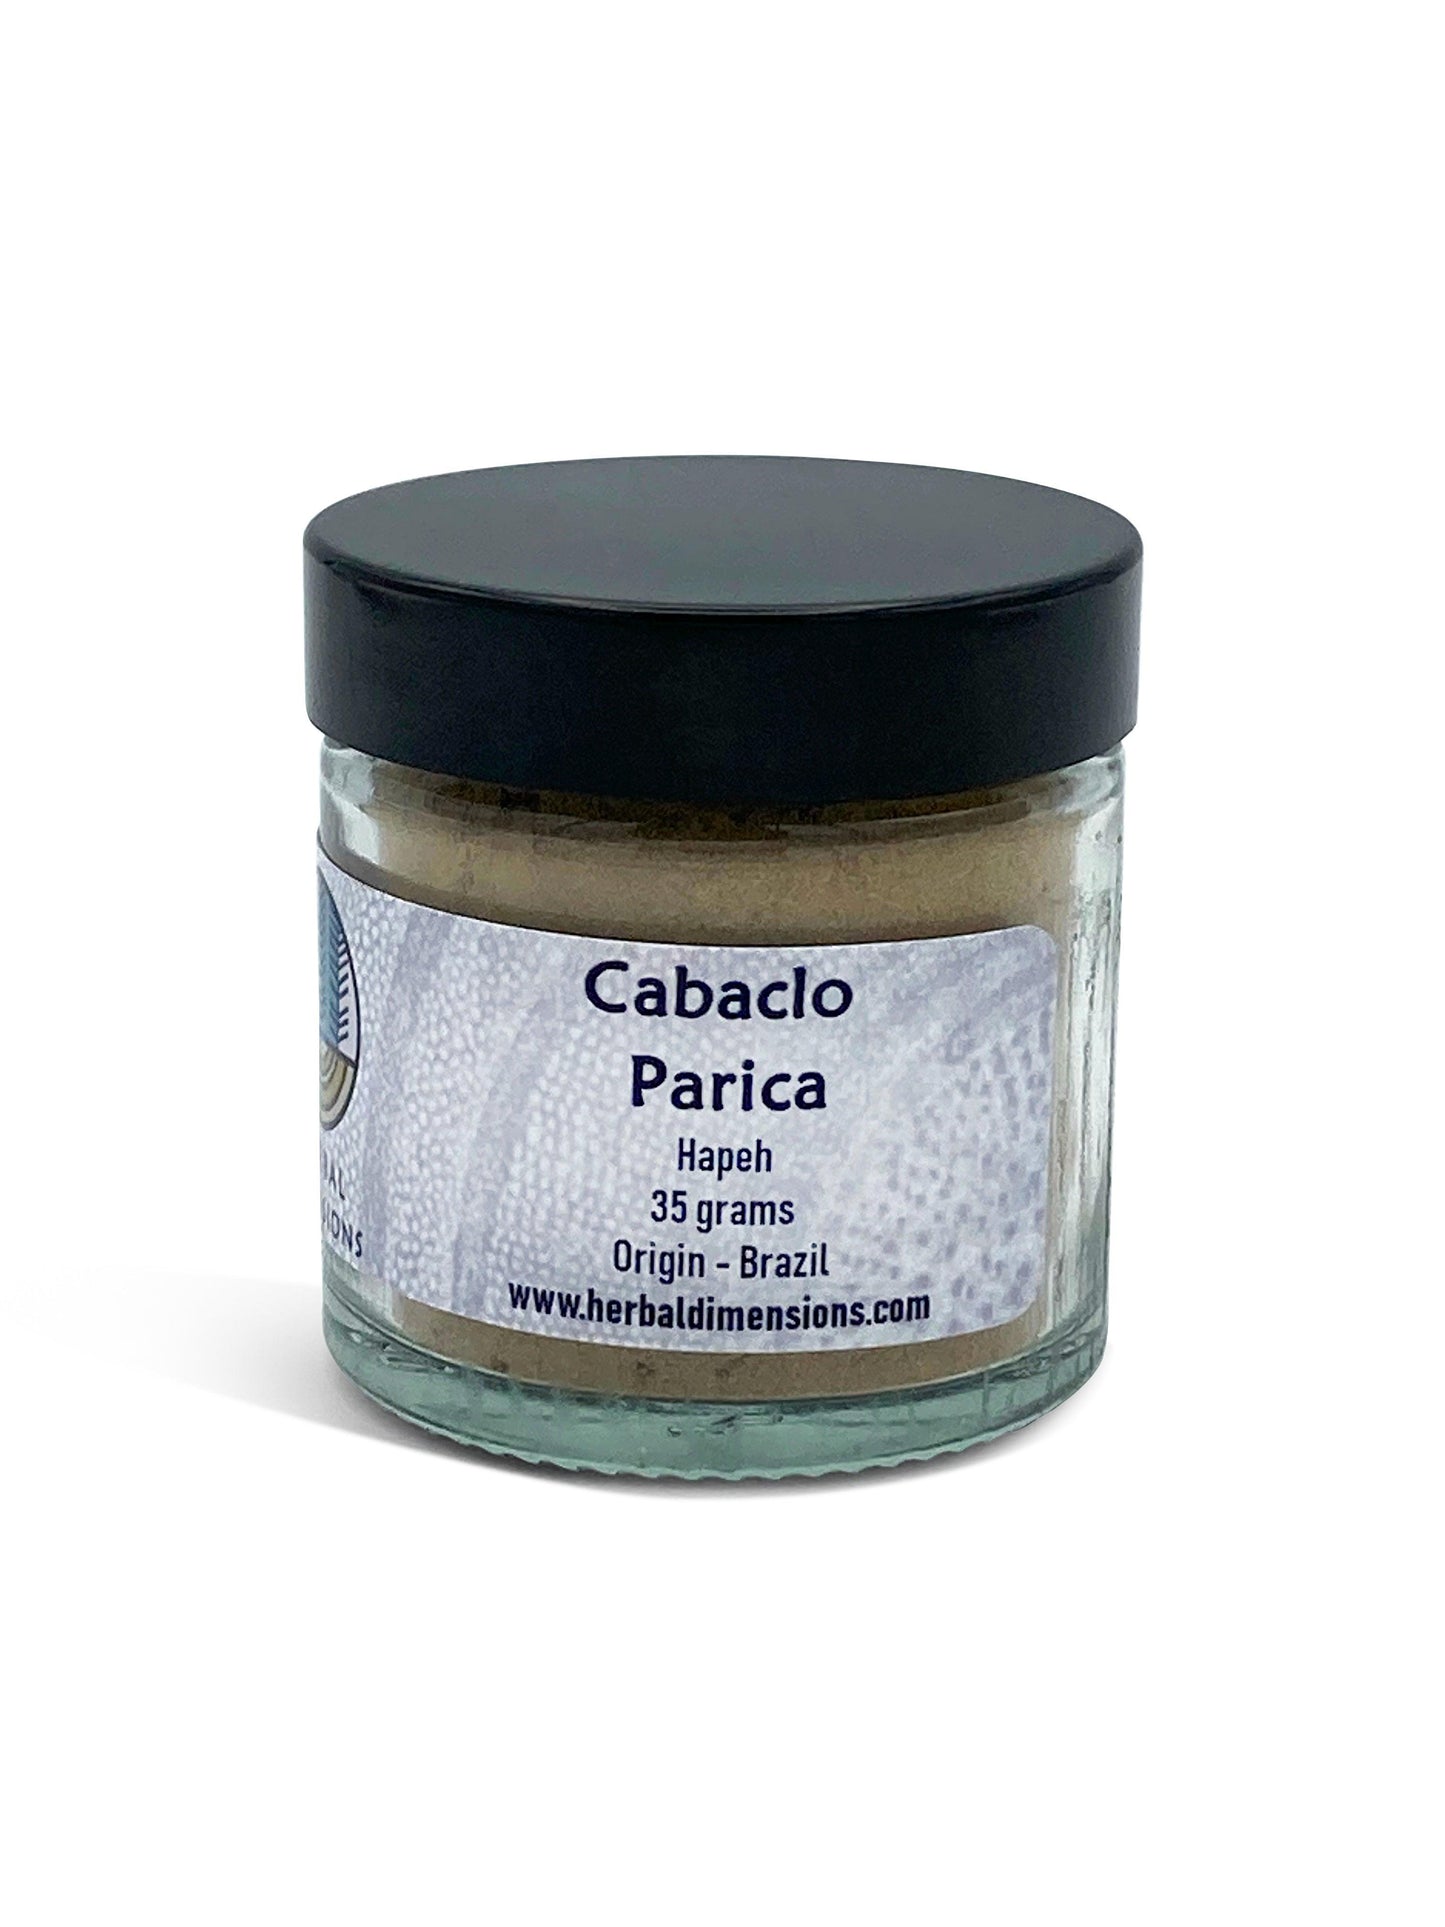 Cabaclo parica - Herbaldimensions.com